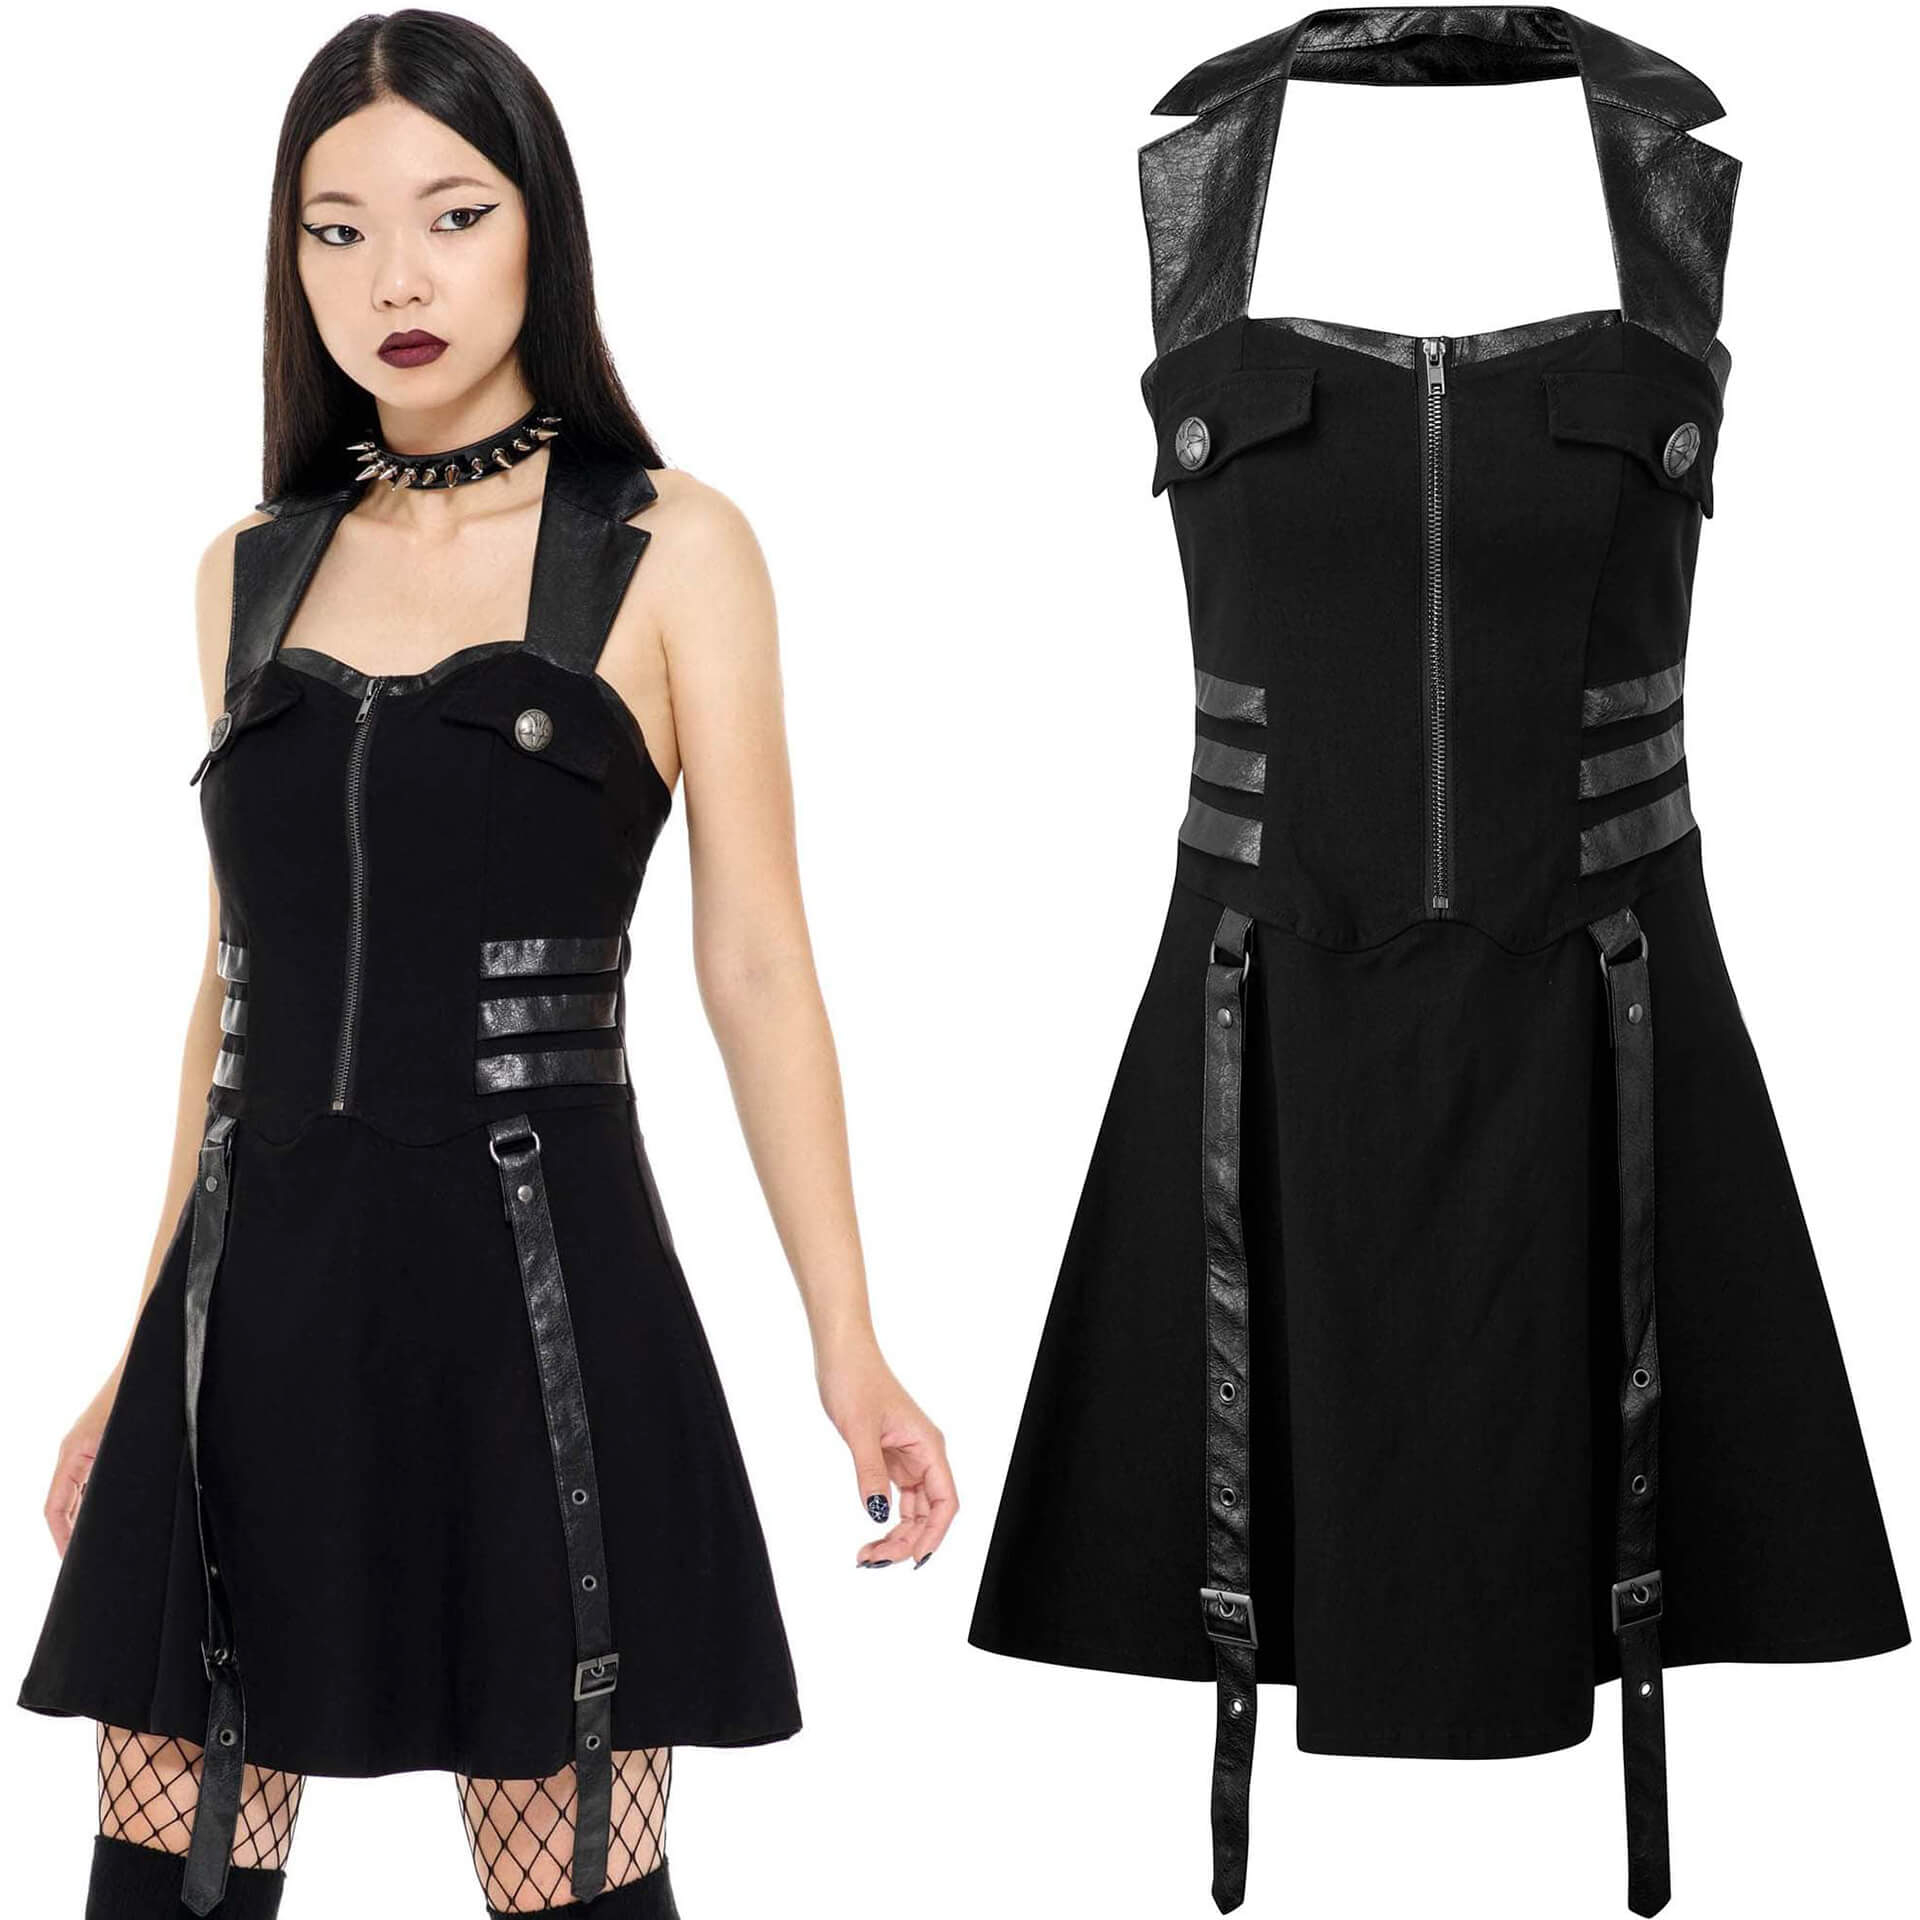 Psy-Ops Black Halter Dress